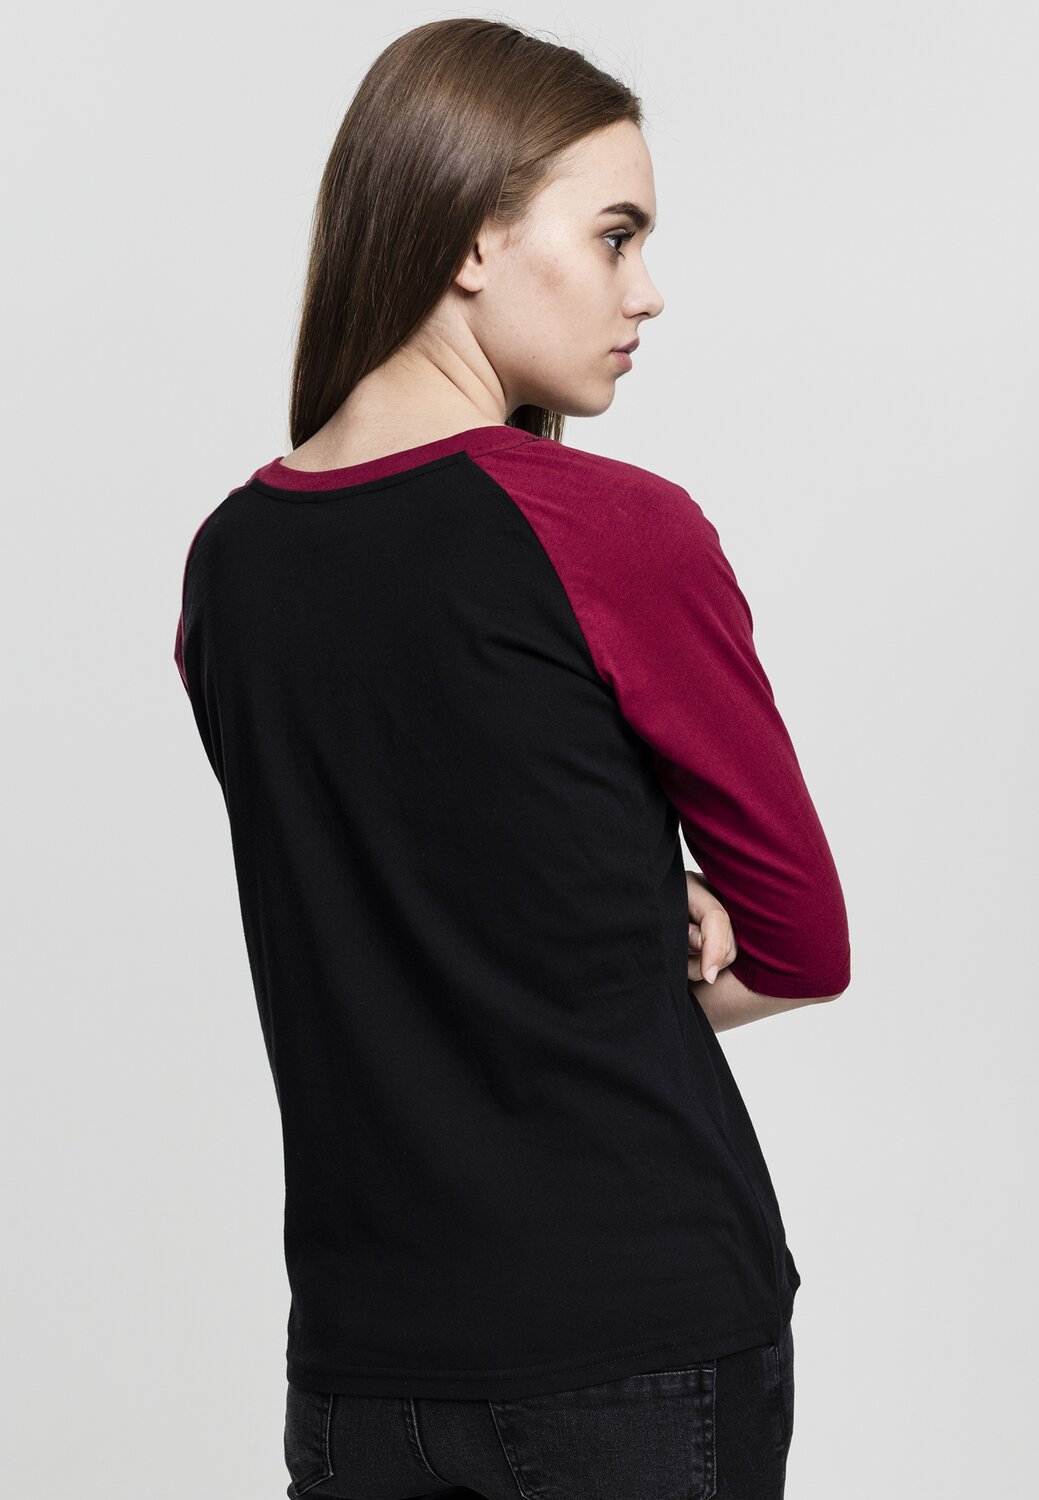 T-Shirt 3/4 Contrast Raglan Ladies black/burgundy | MAXISCOOT